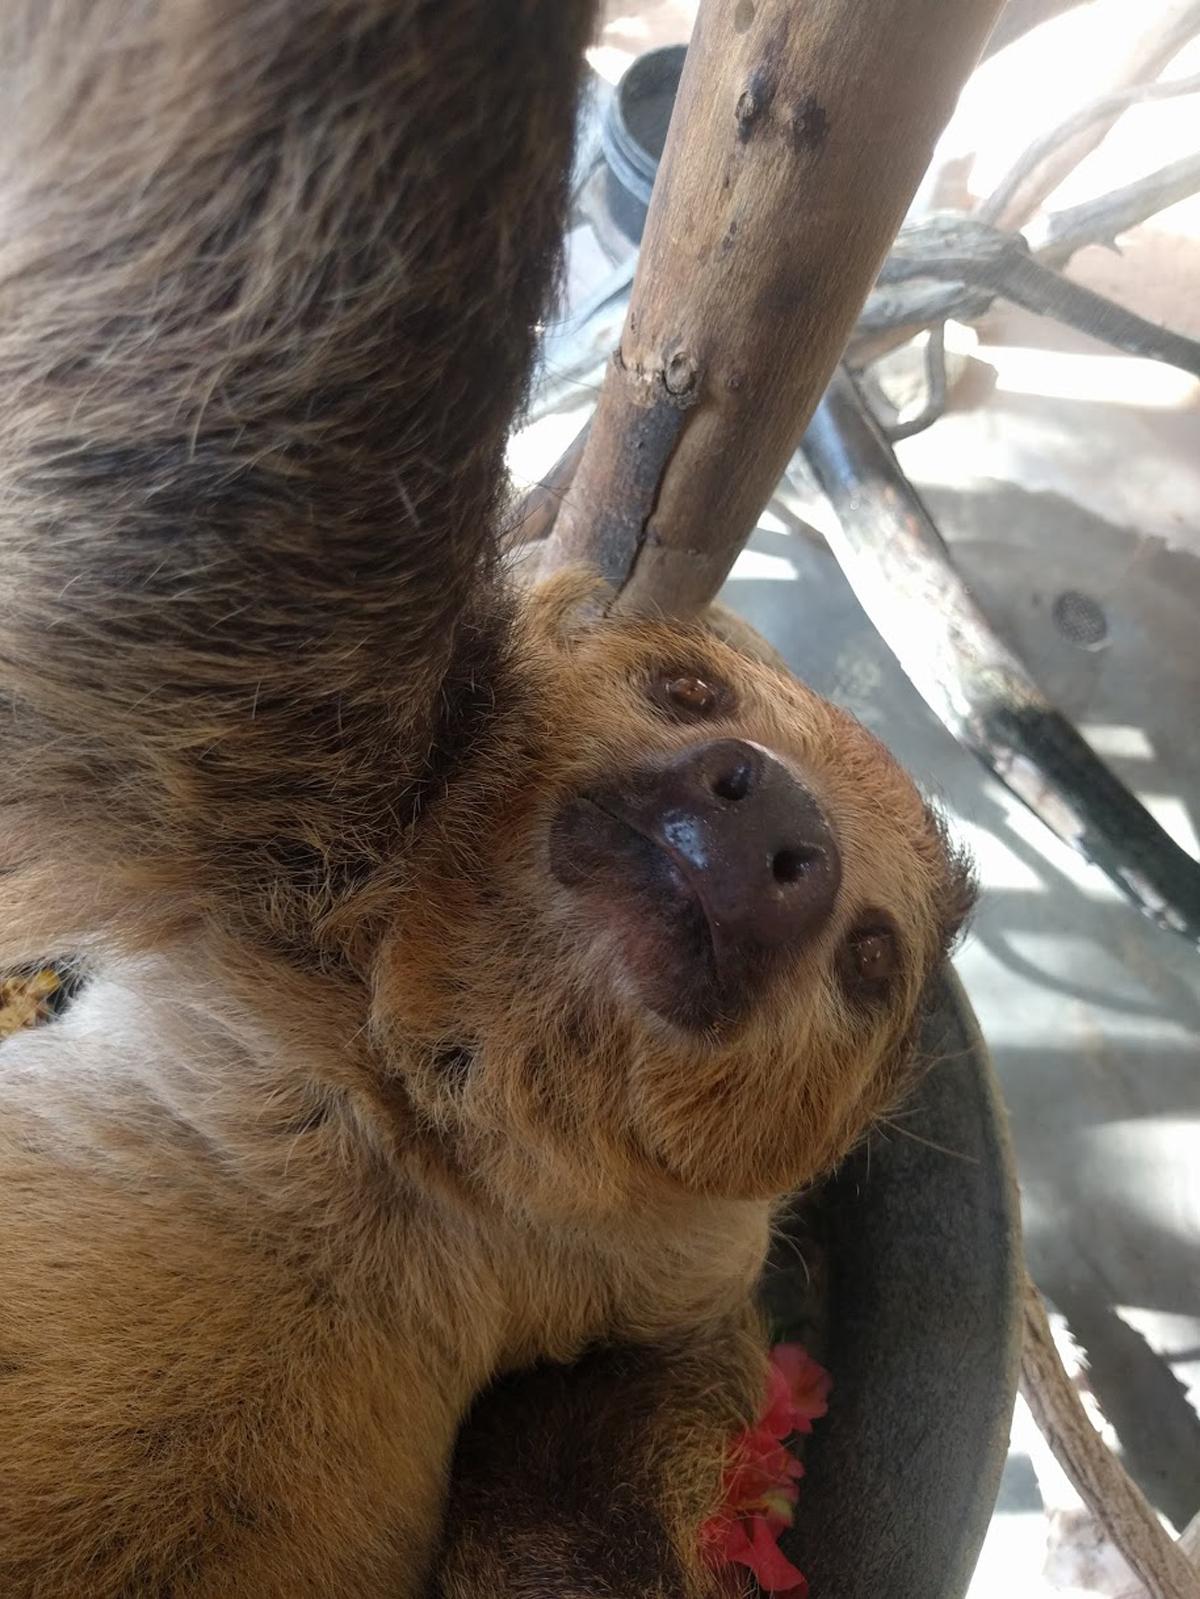 Google installs 'animal selfie' cameras at Los Angeles Zoo |   news